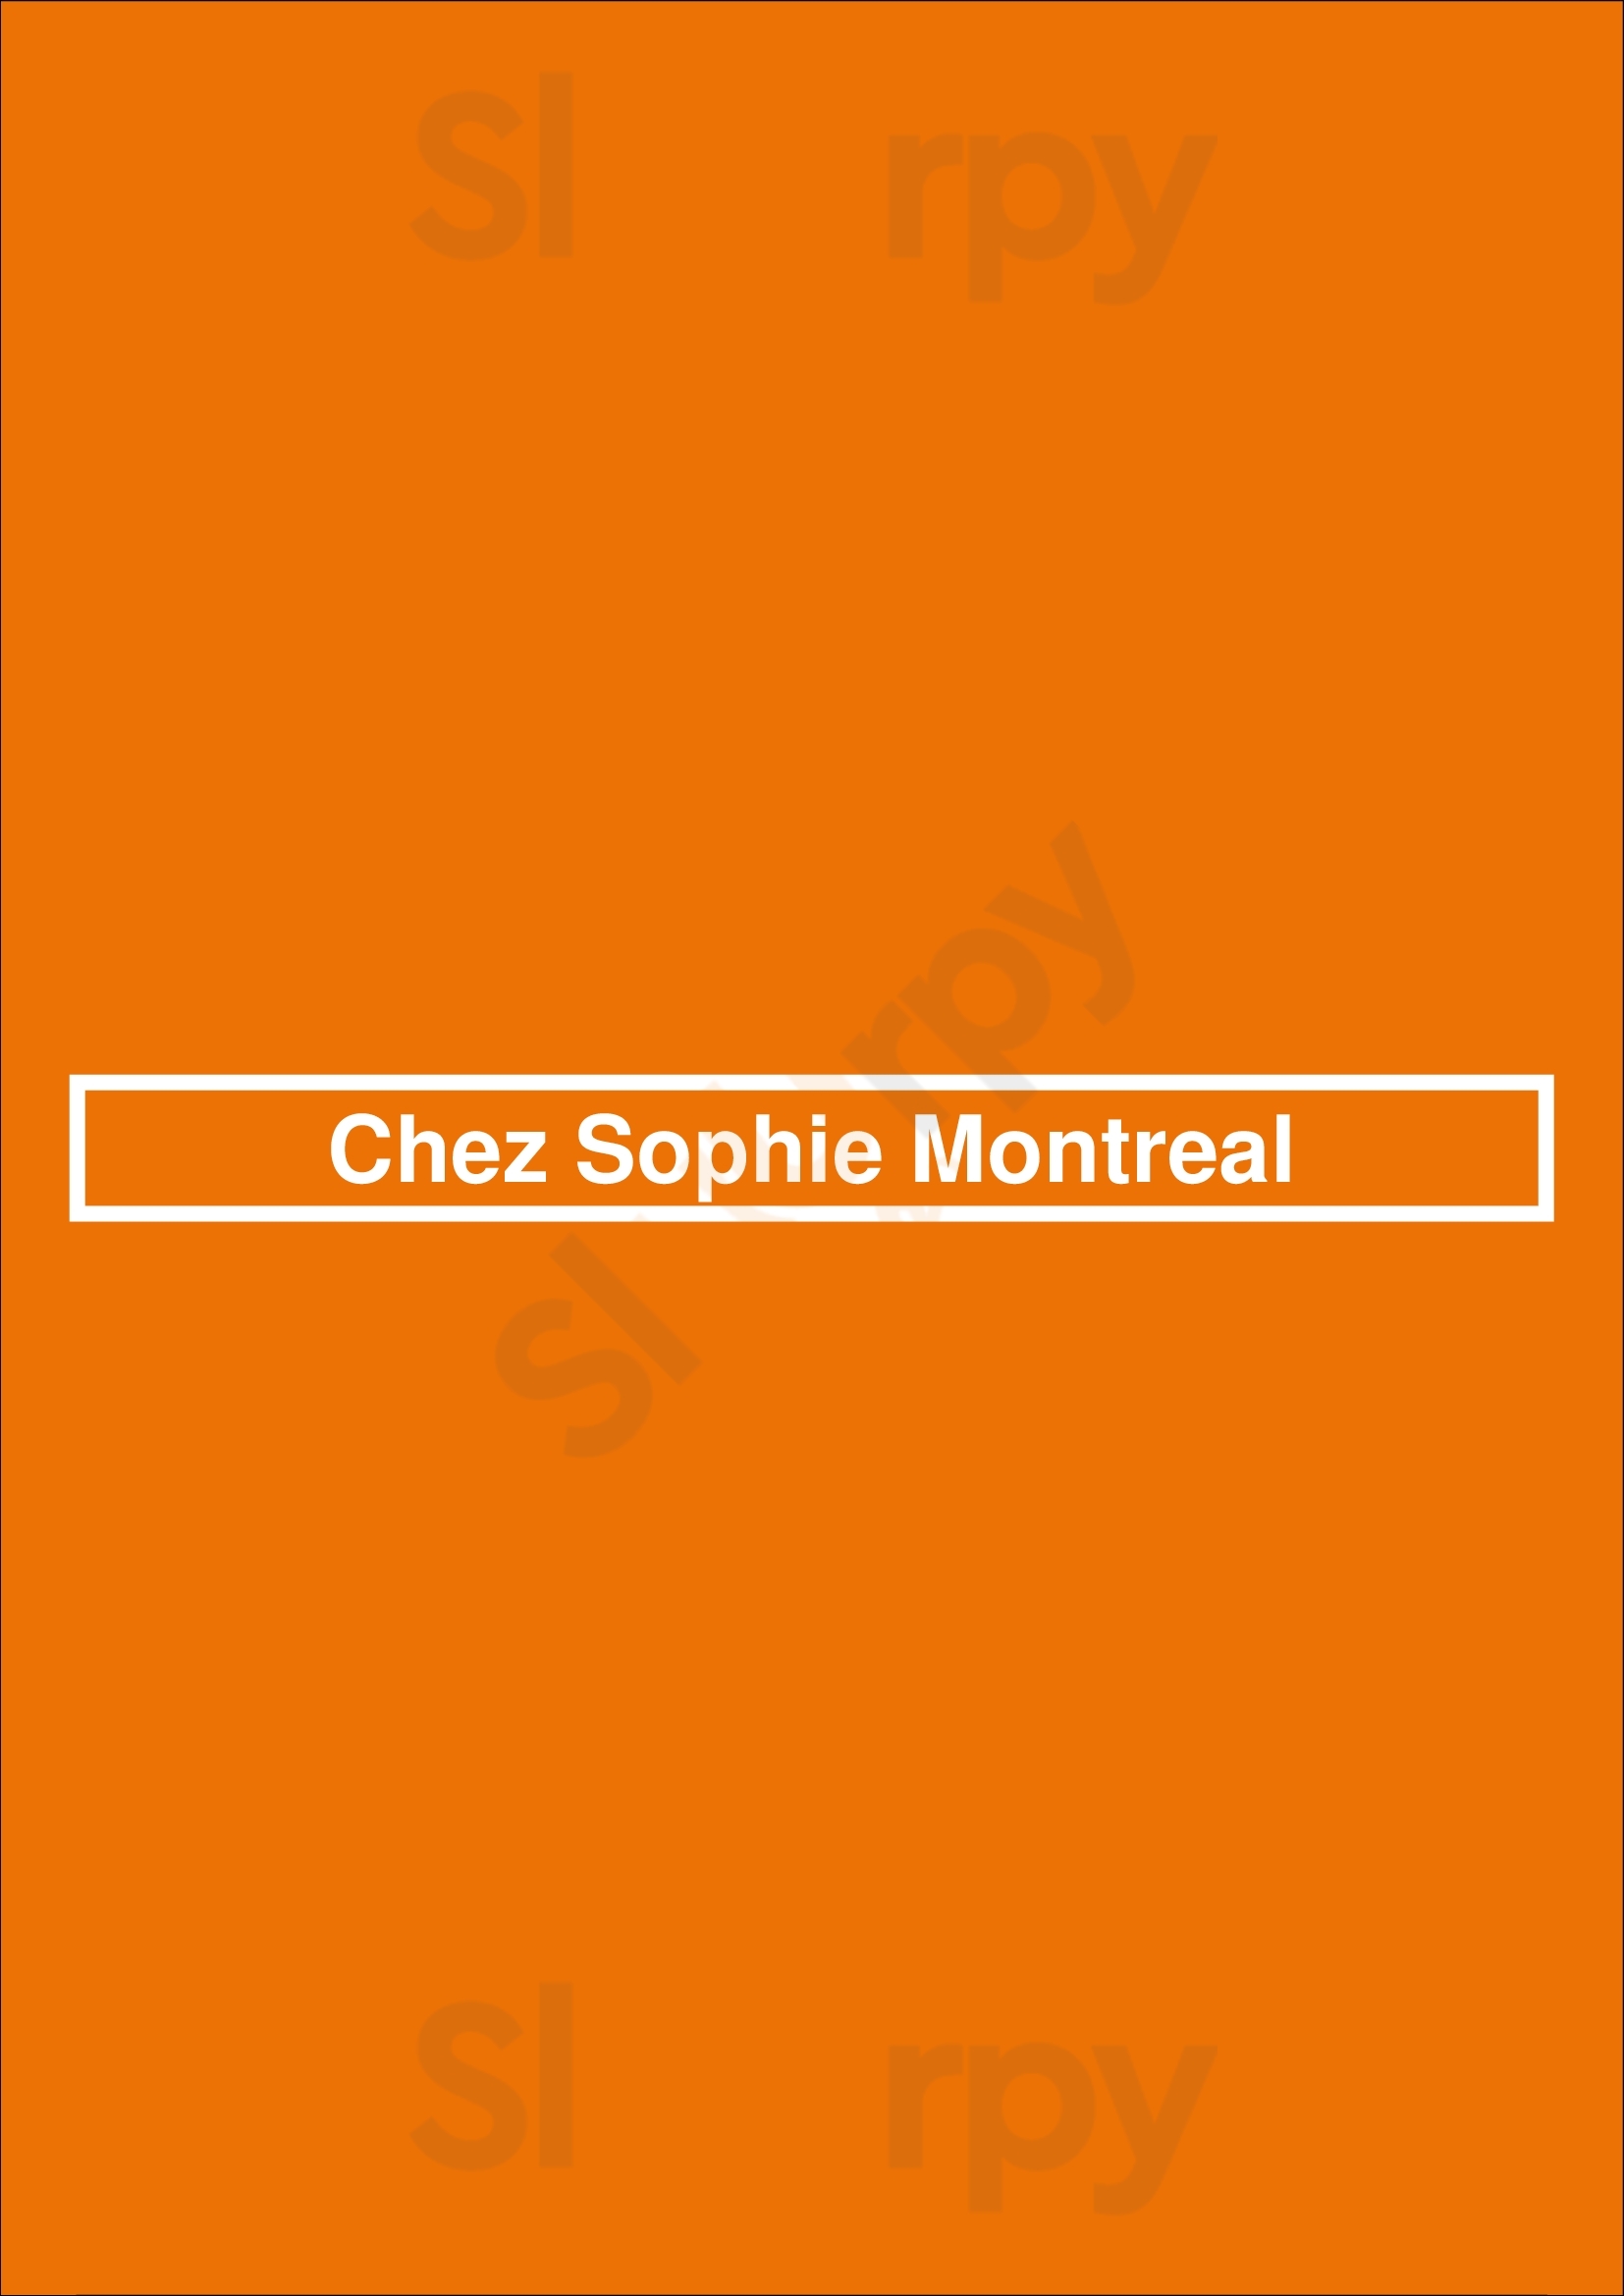 Chez Sophie Montreal Montreal Menu - 1